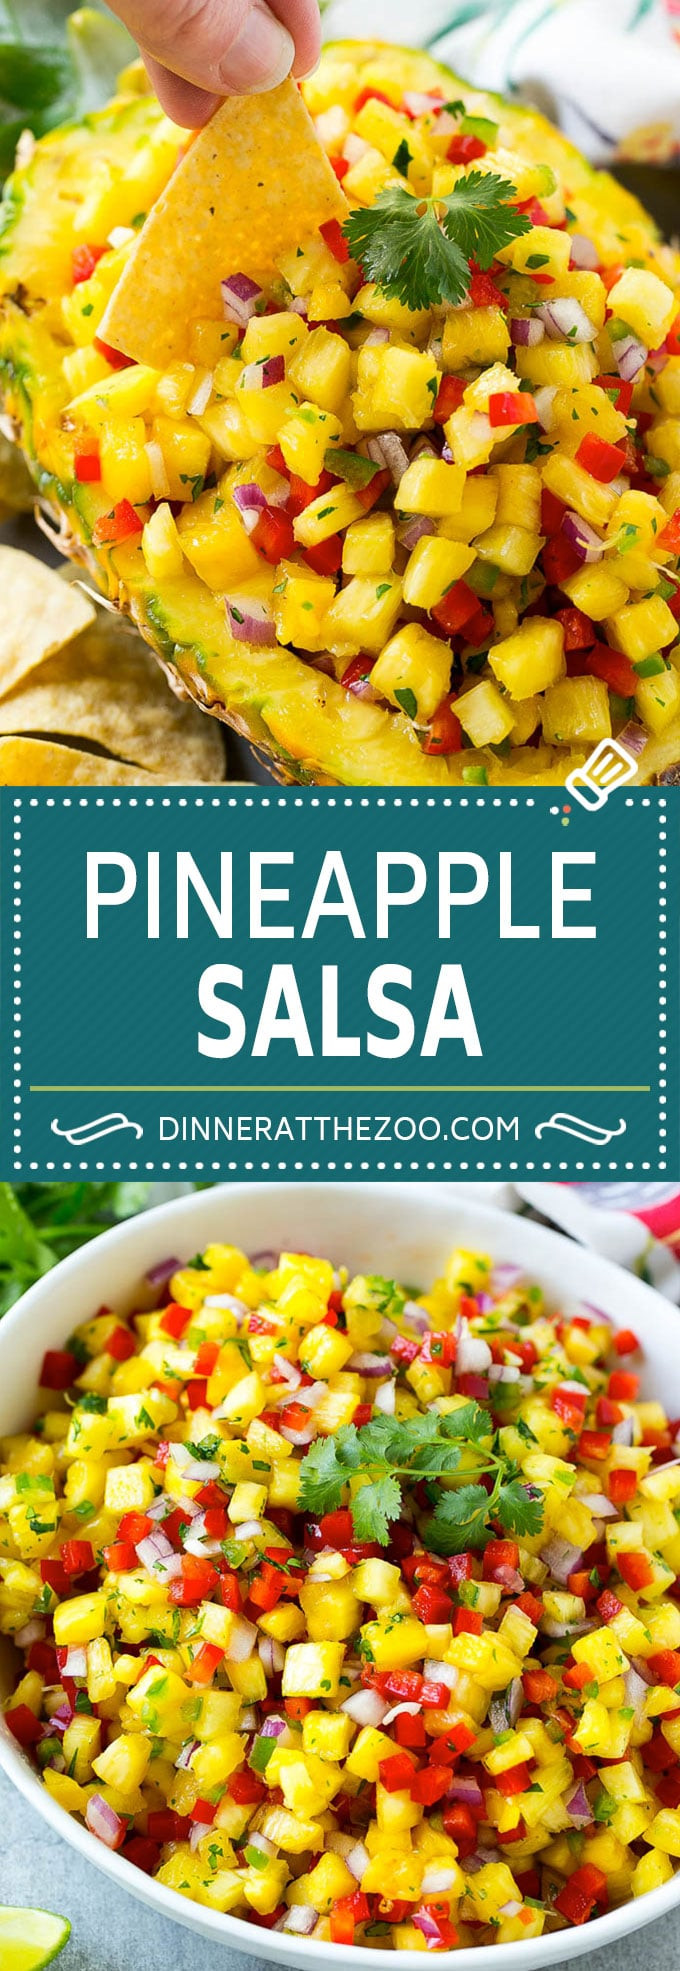 Easy Pineapple Salsa Recipe
 Pineapple Salsa Dinner at the Zoo